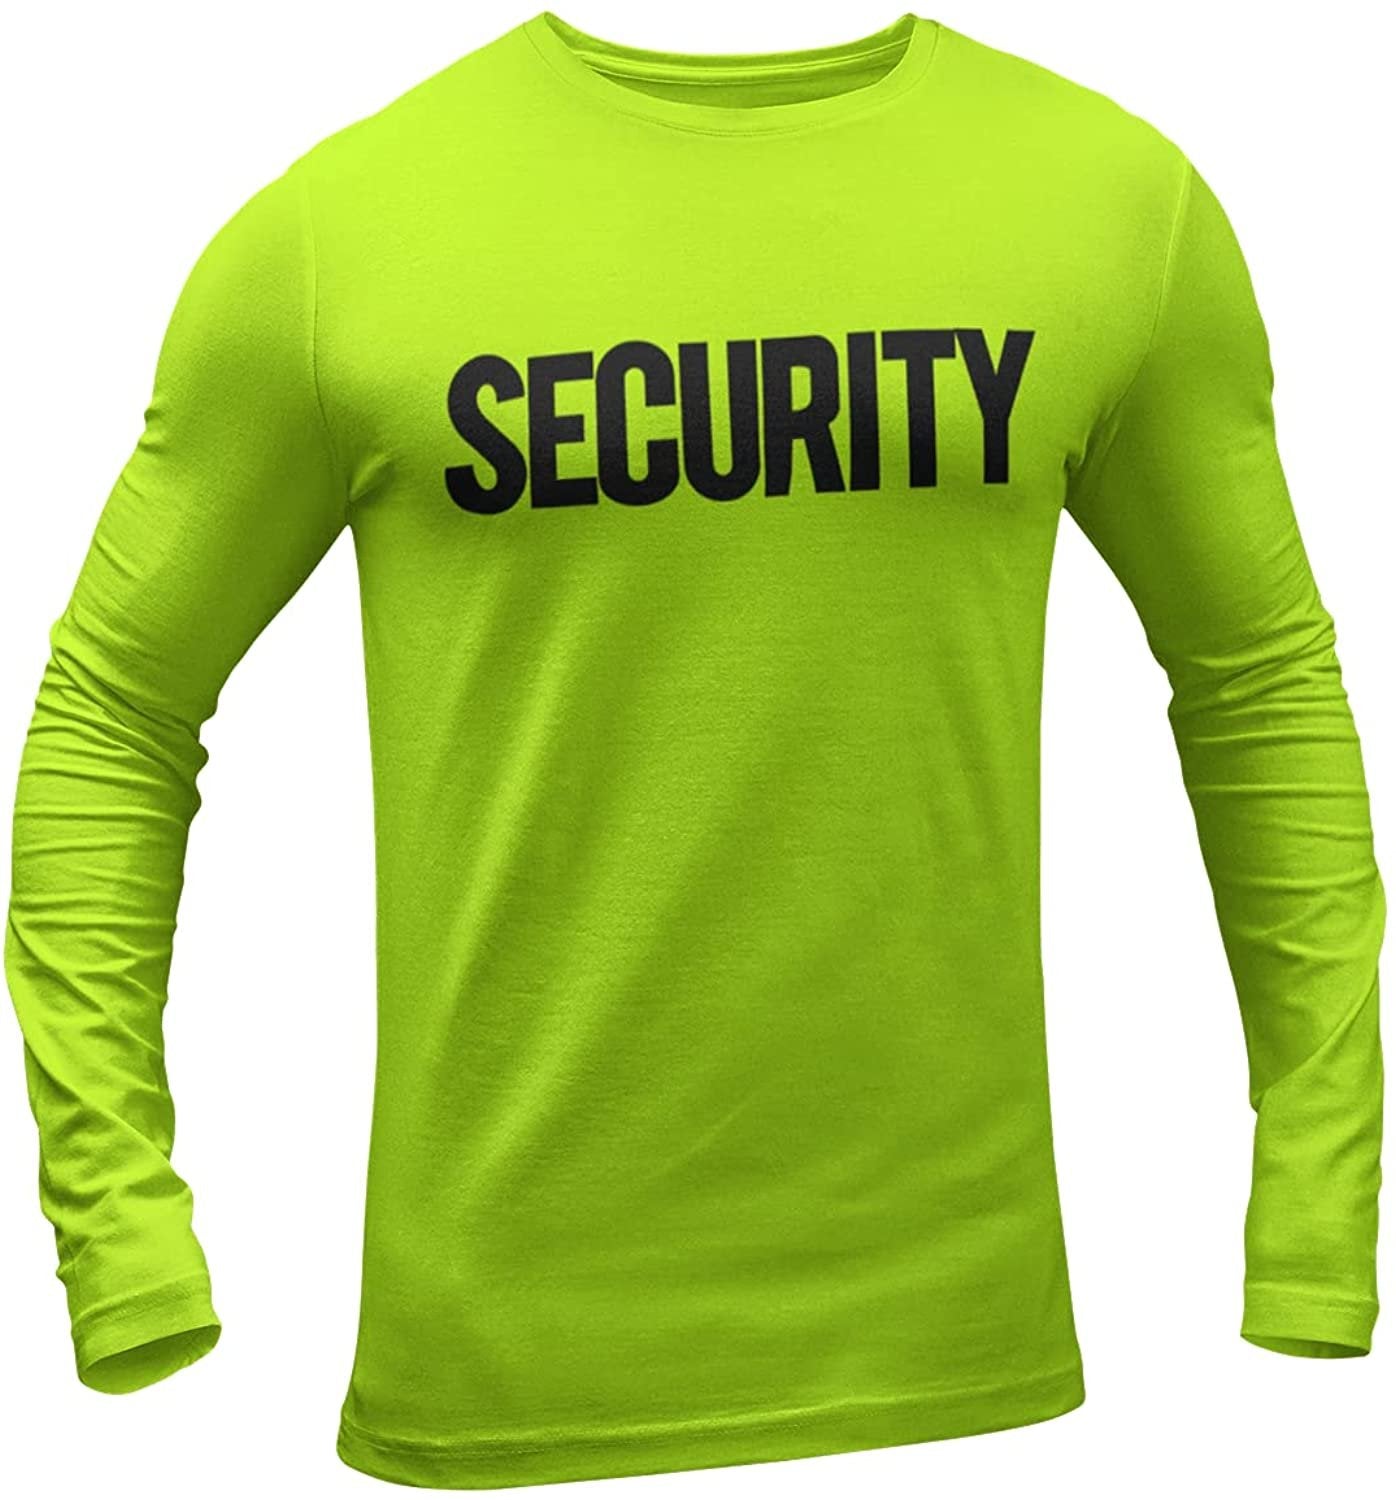 Men's Long Sleeve Security T-Shirt (Safety Green / Black , Solid Design)